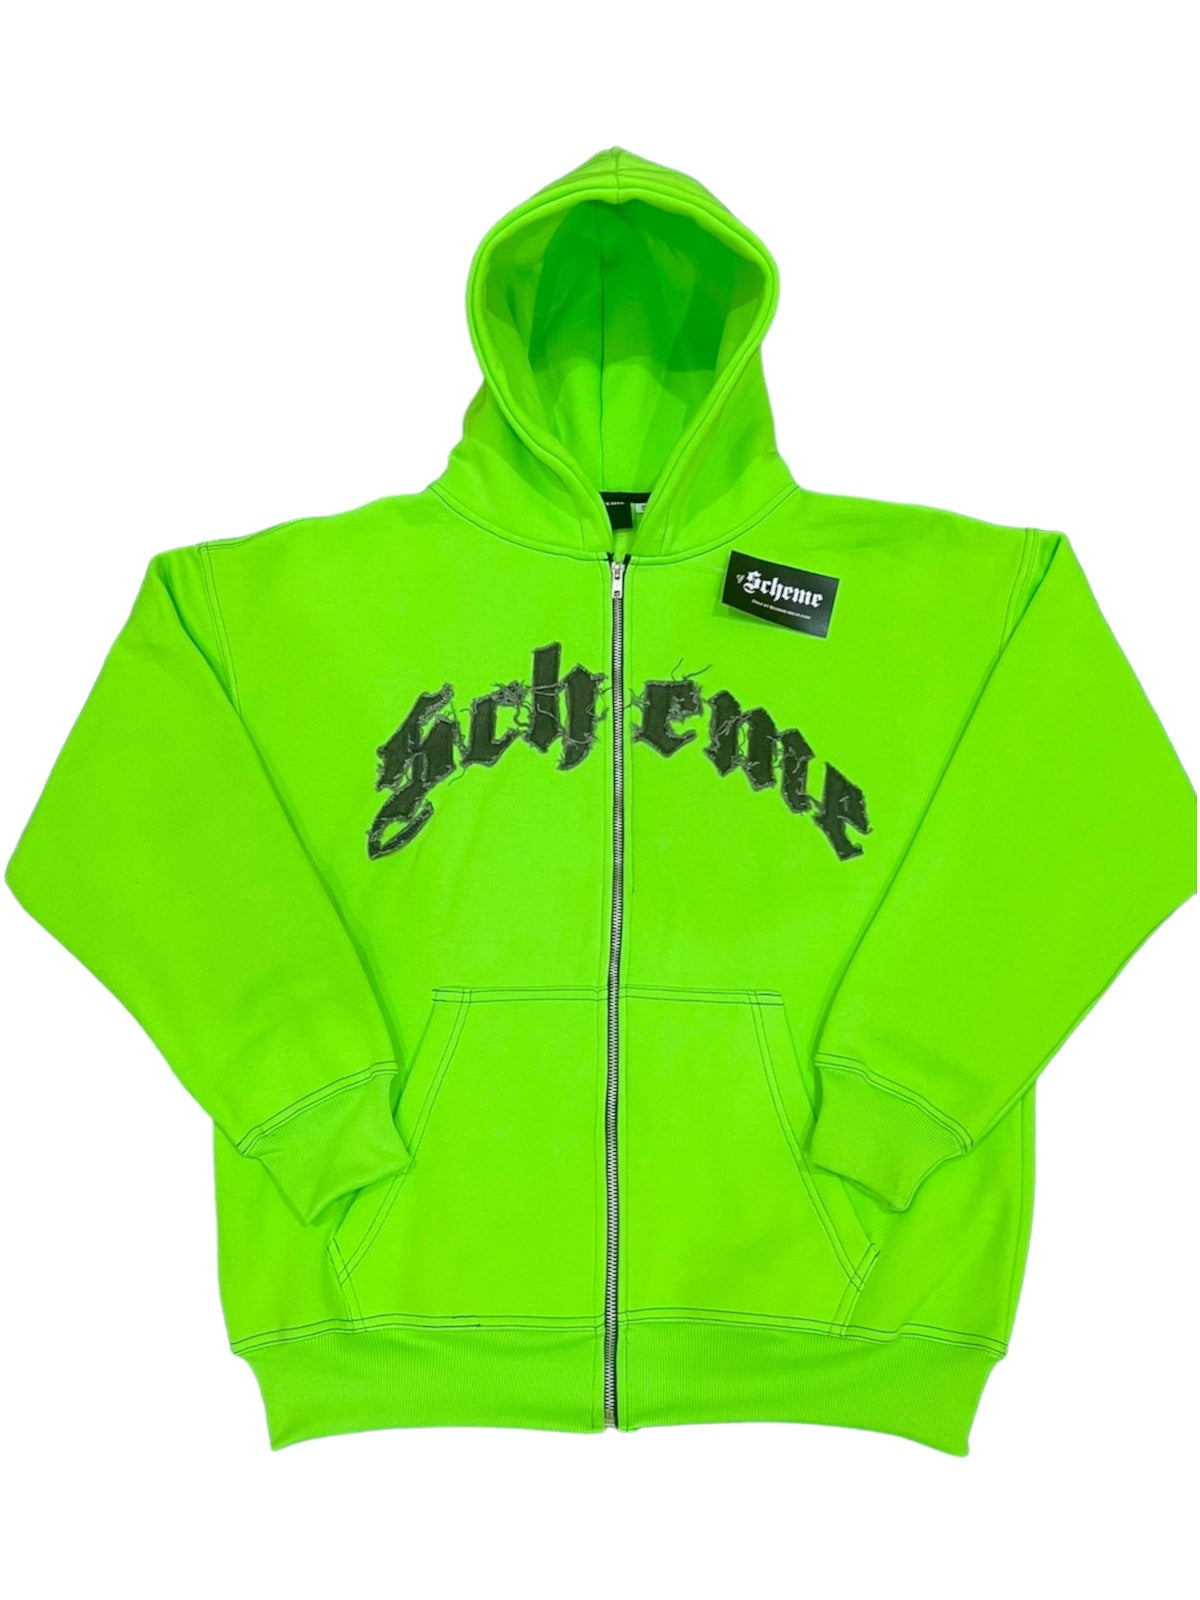 "Scheme" Distressed Zip Up Hoodie  - Lime Green